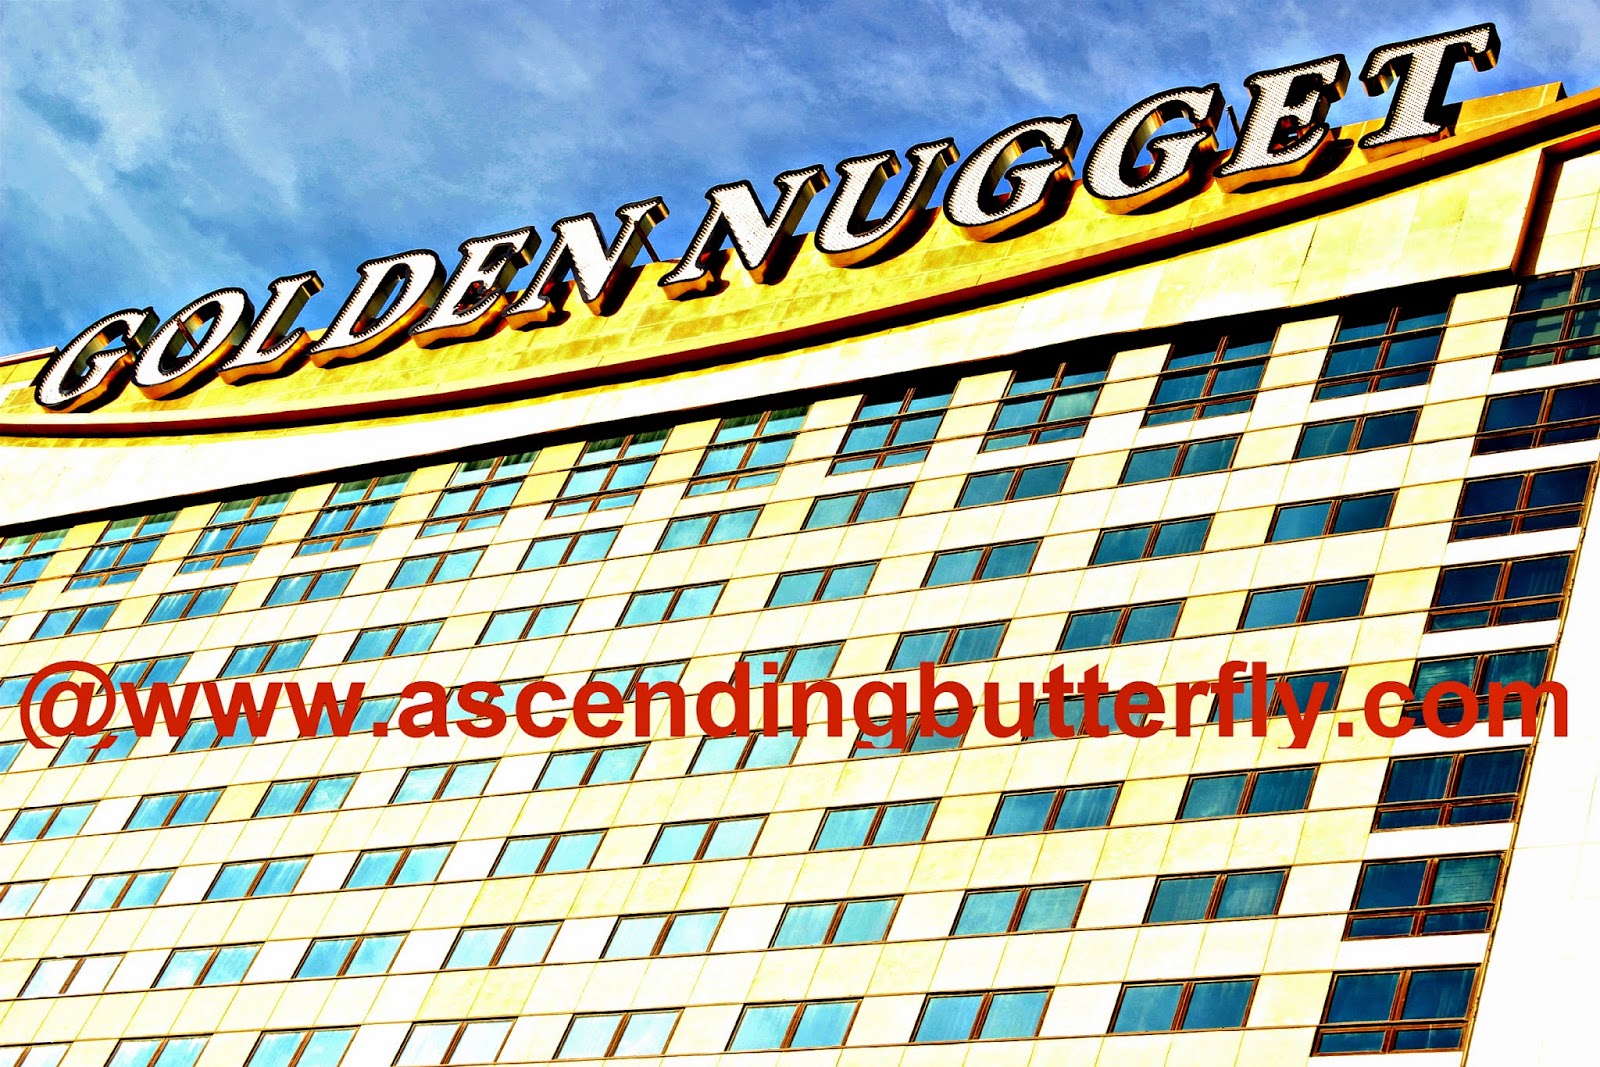 Atlantic City, Visit AC, Atlantic City Alliance, DO AC, Golden Nugget Casino